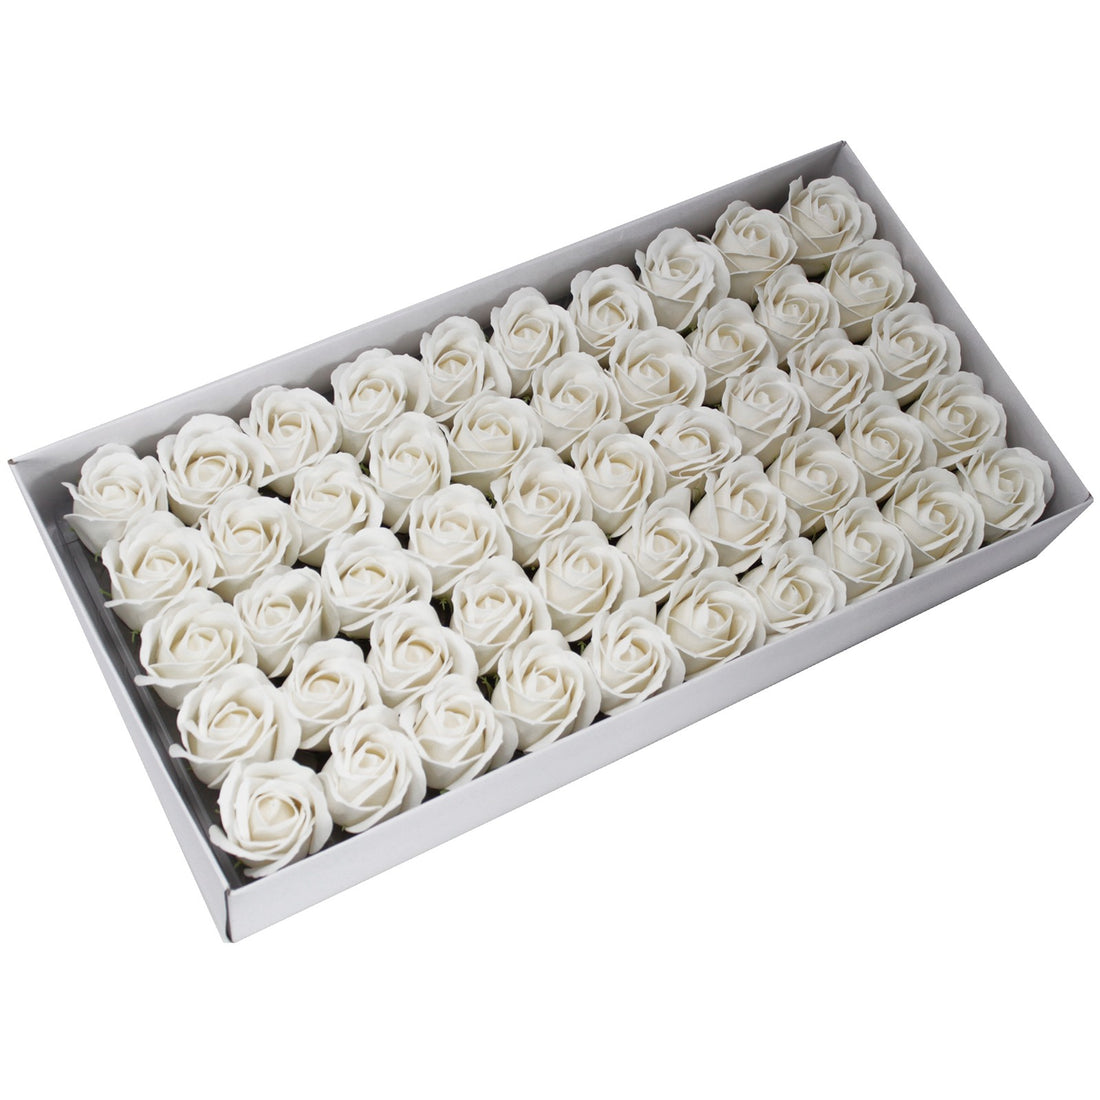 Craft Soap Flowers - Med Rose - White x 10 pcs